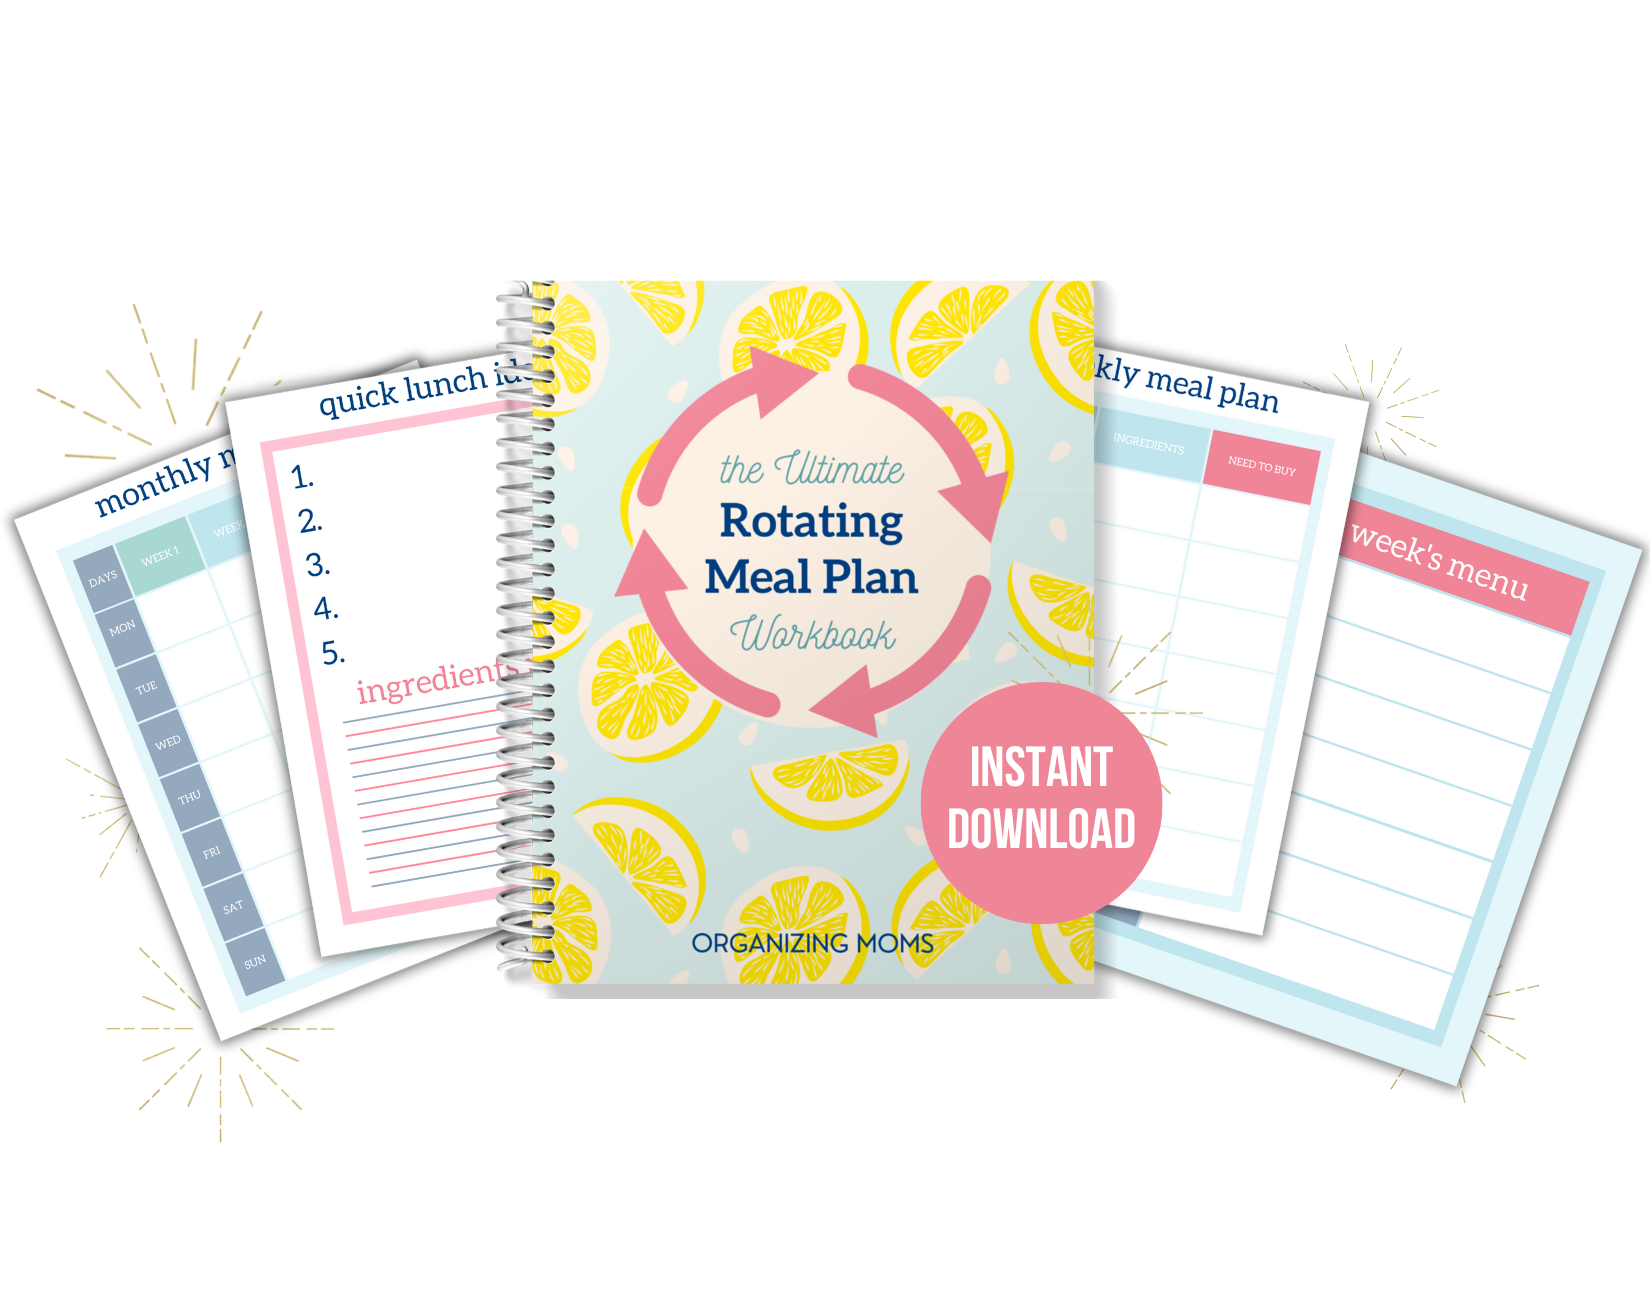 The Ultimate Rotating Meal Plan Workbook mockup